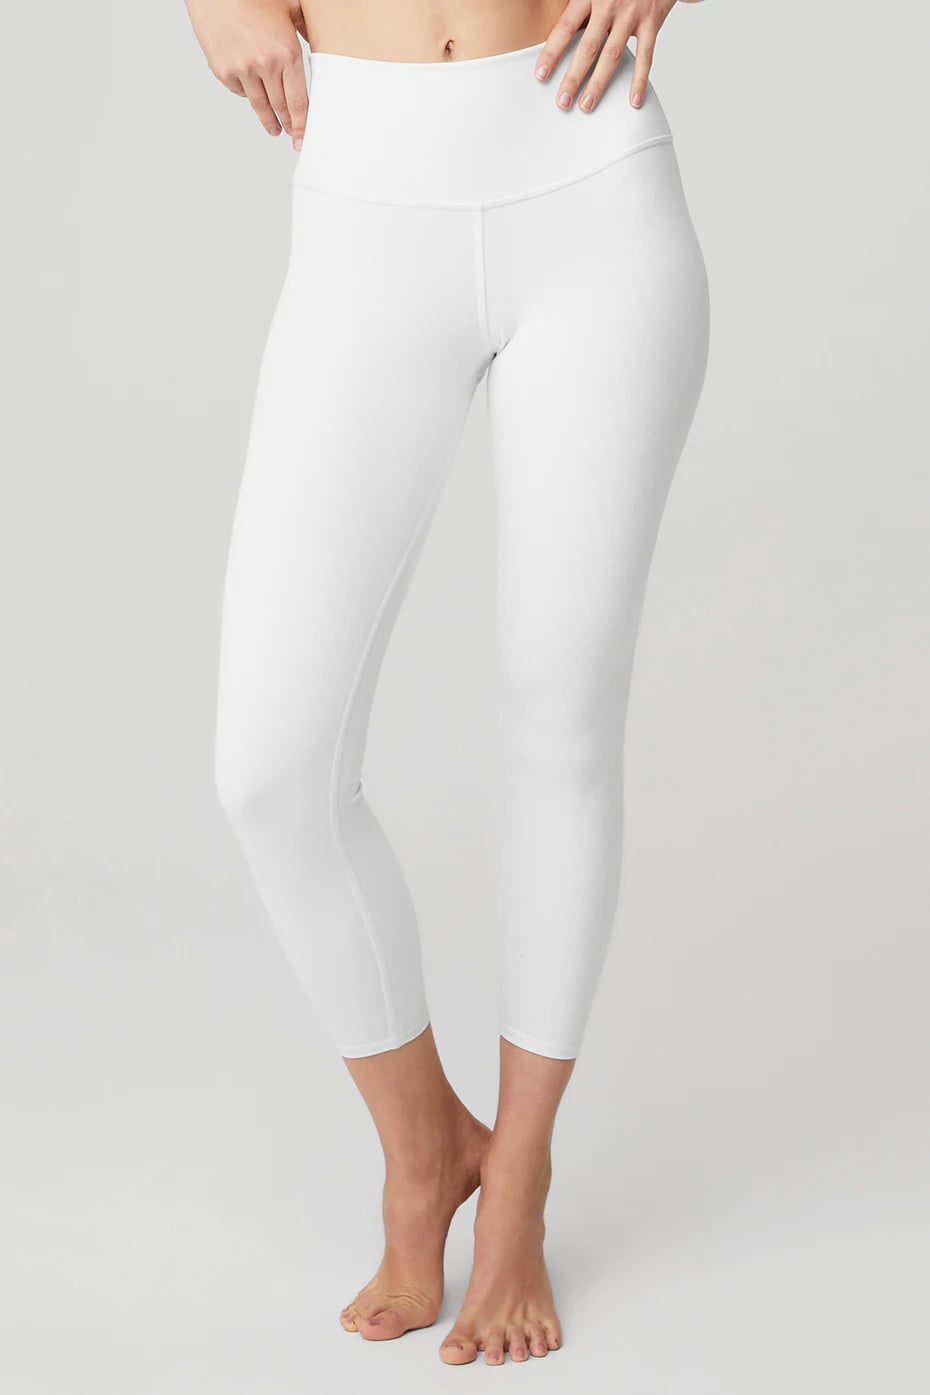 Airbrush crop leggings in white - Alo Yoga